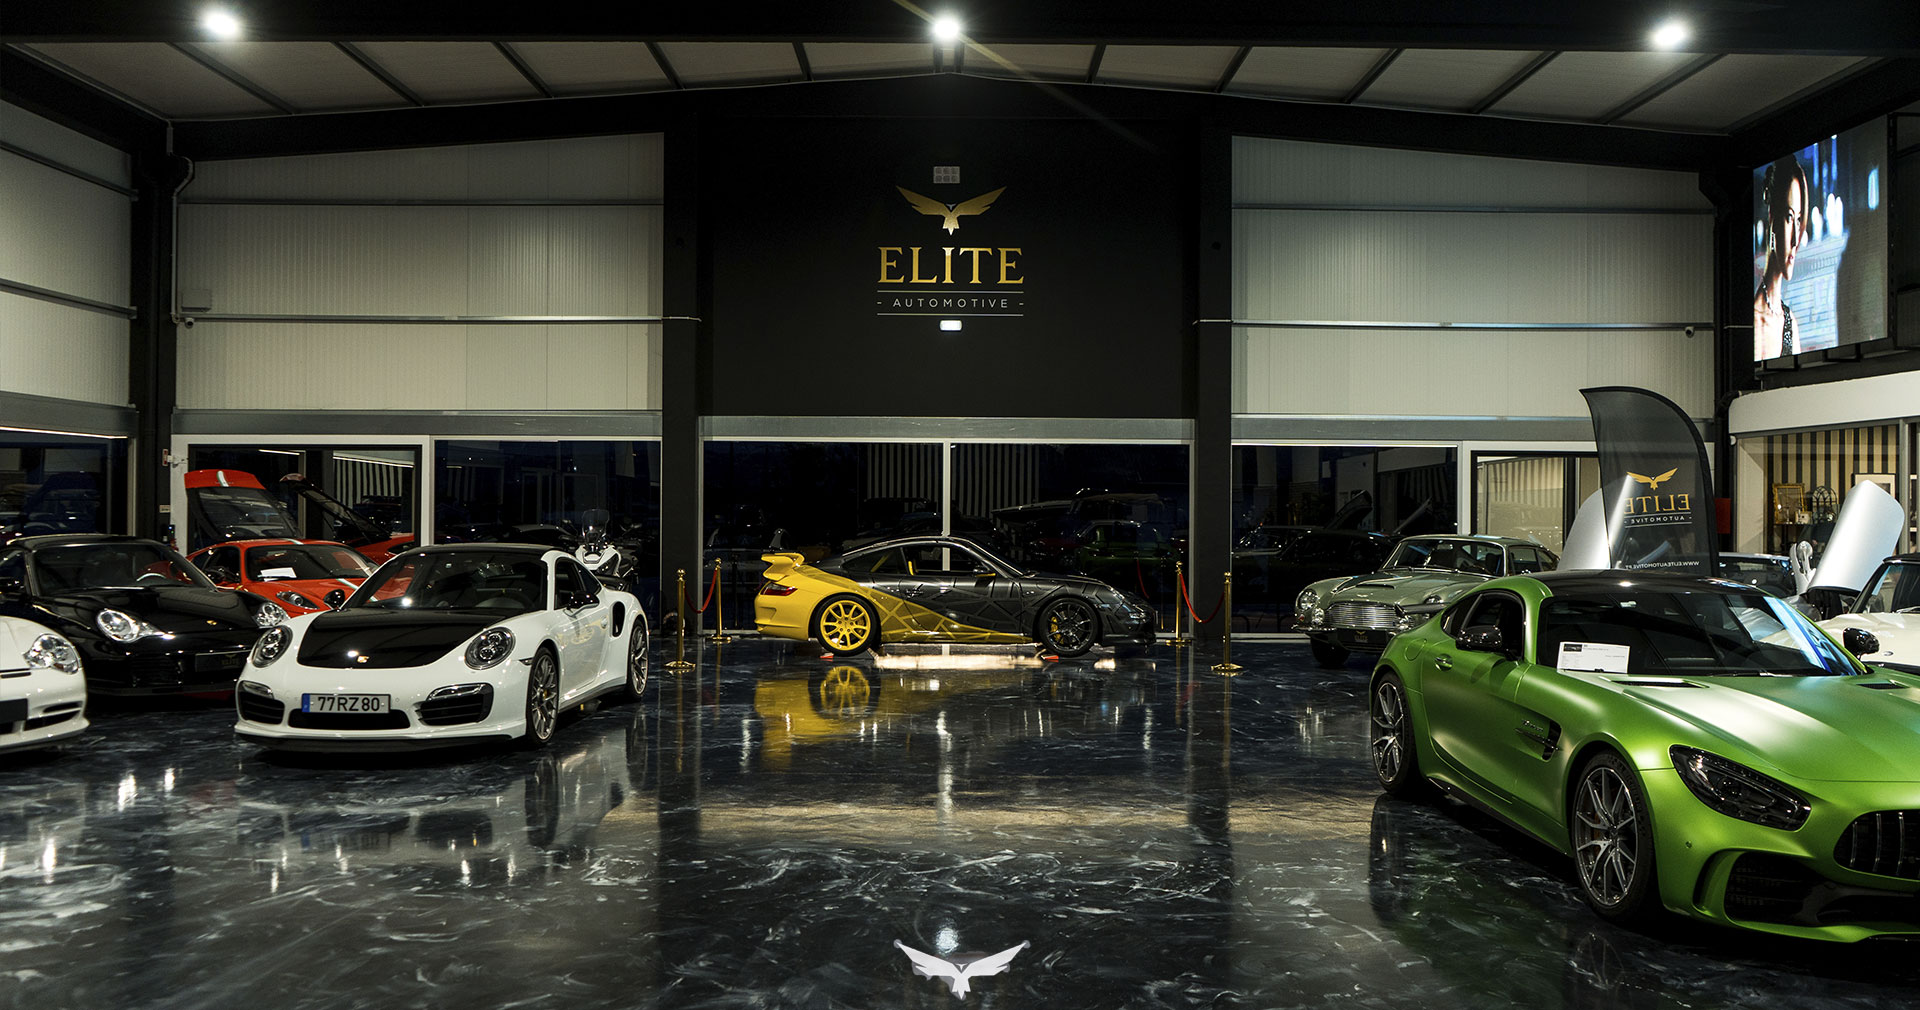 Elite automotive